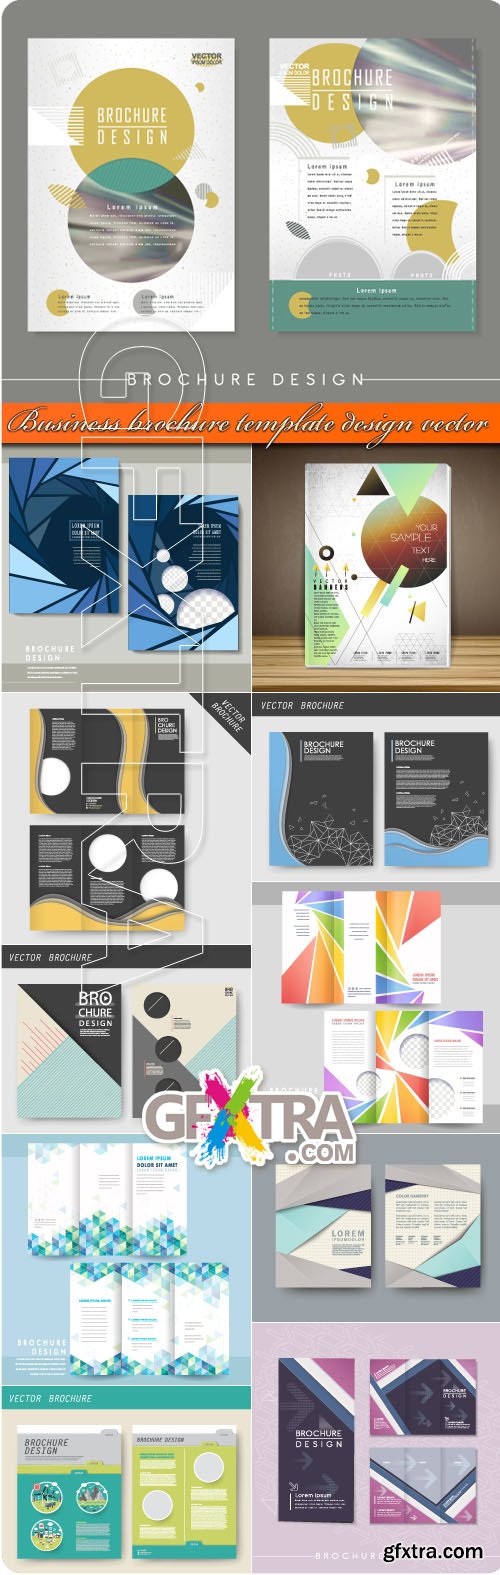 Business brochure template design vector